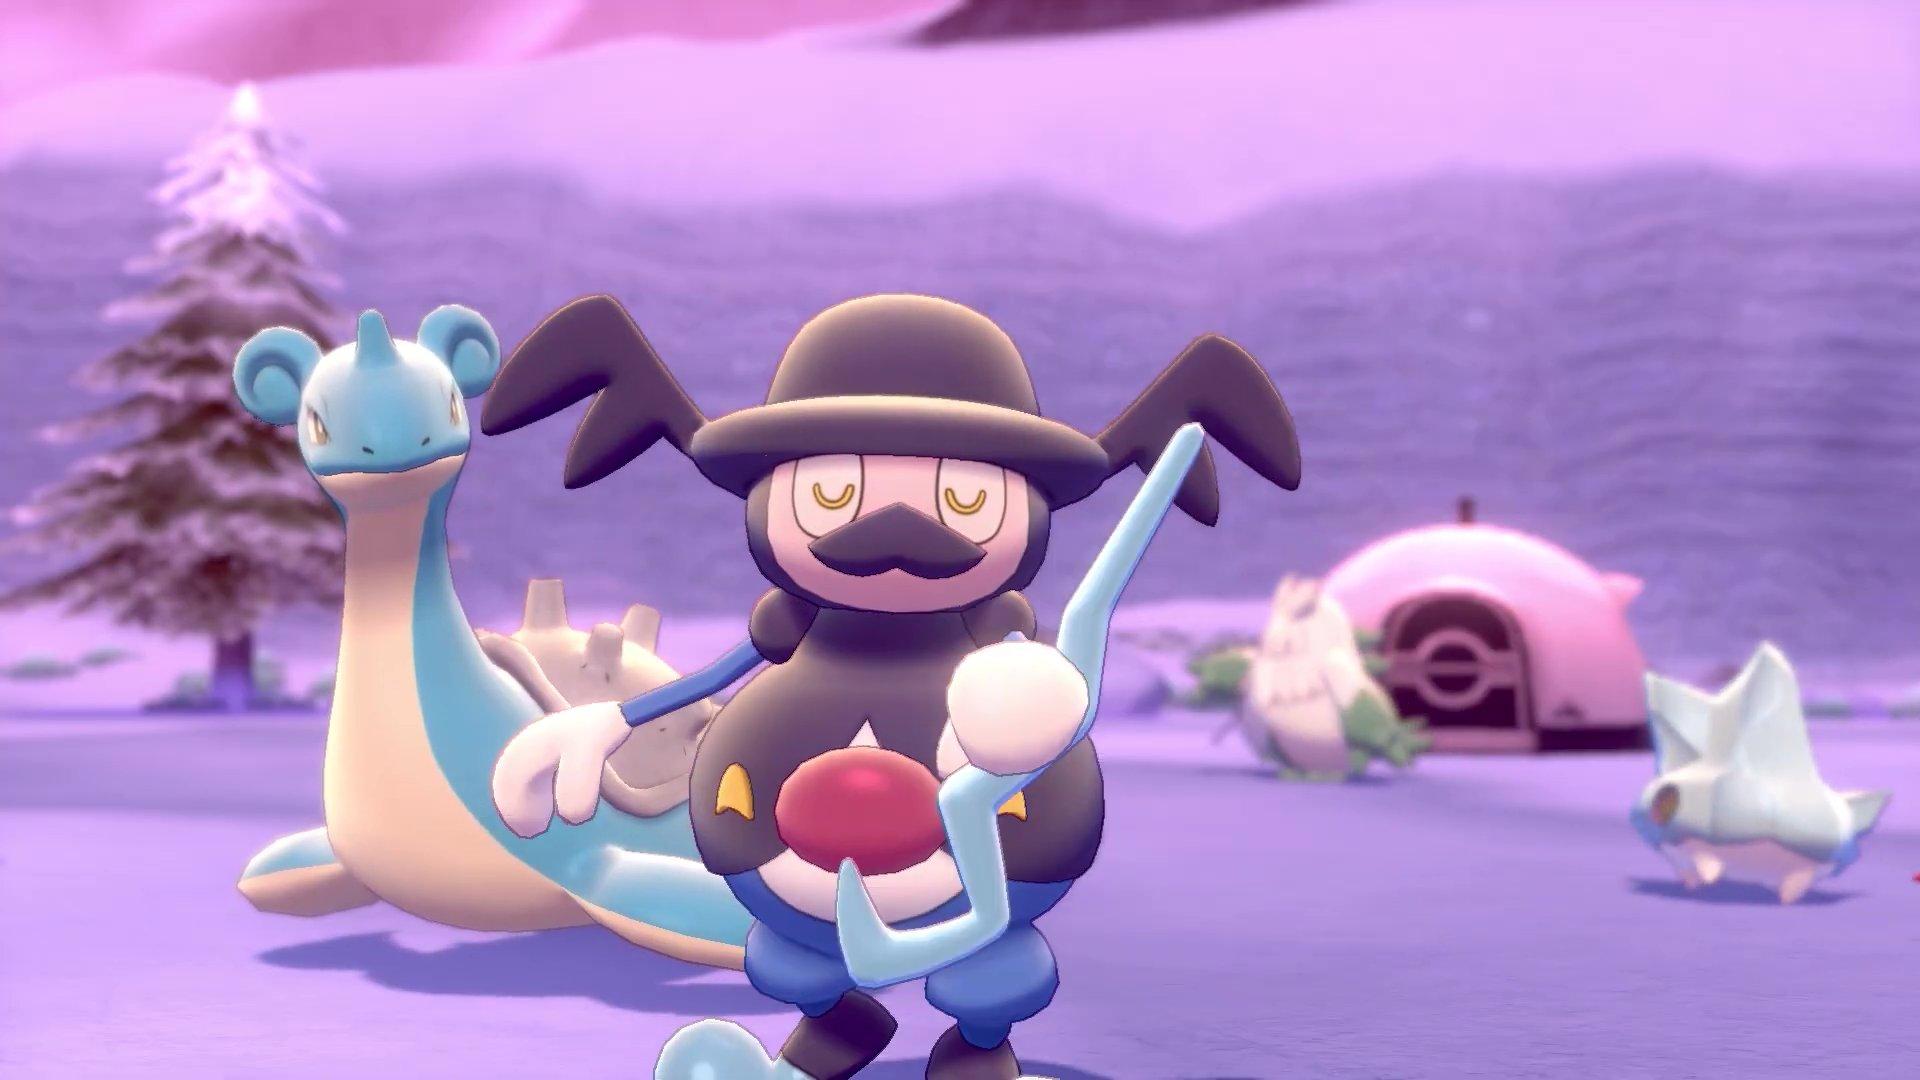 New Galar Pokémon Mr. Rime officially revealed for Pokémon